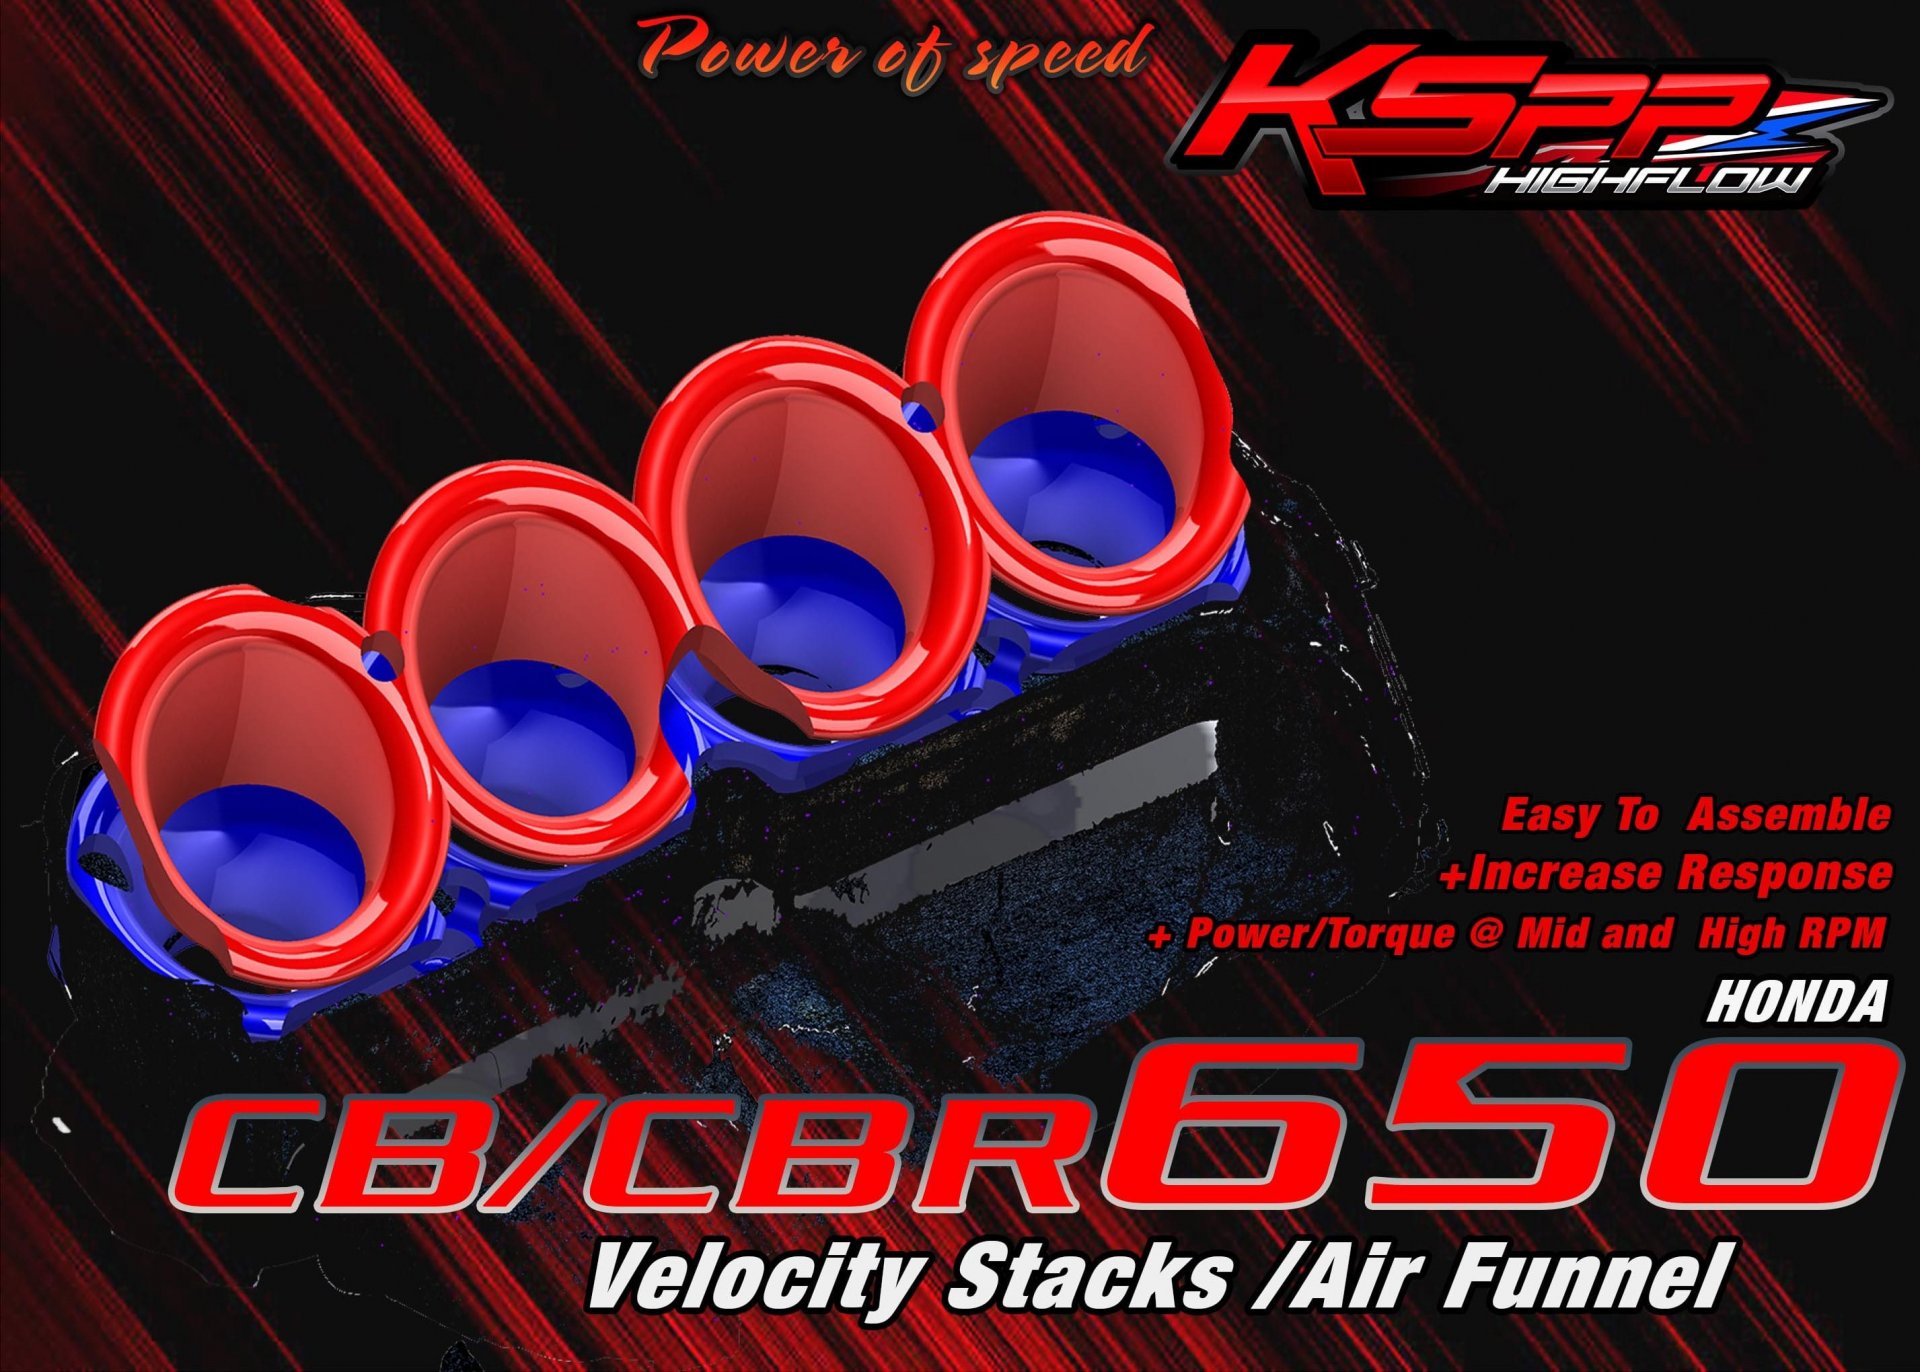 CB/CBR650[R]ปากแตร /  Velocity stack -ปากแตรCB/CBR650  -Intake air pipe CB/CBR650  -Velocity stack  CB/CBR650  - AirFunnel CB/CBR650 [R] [HONDA]